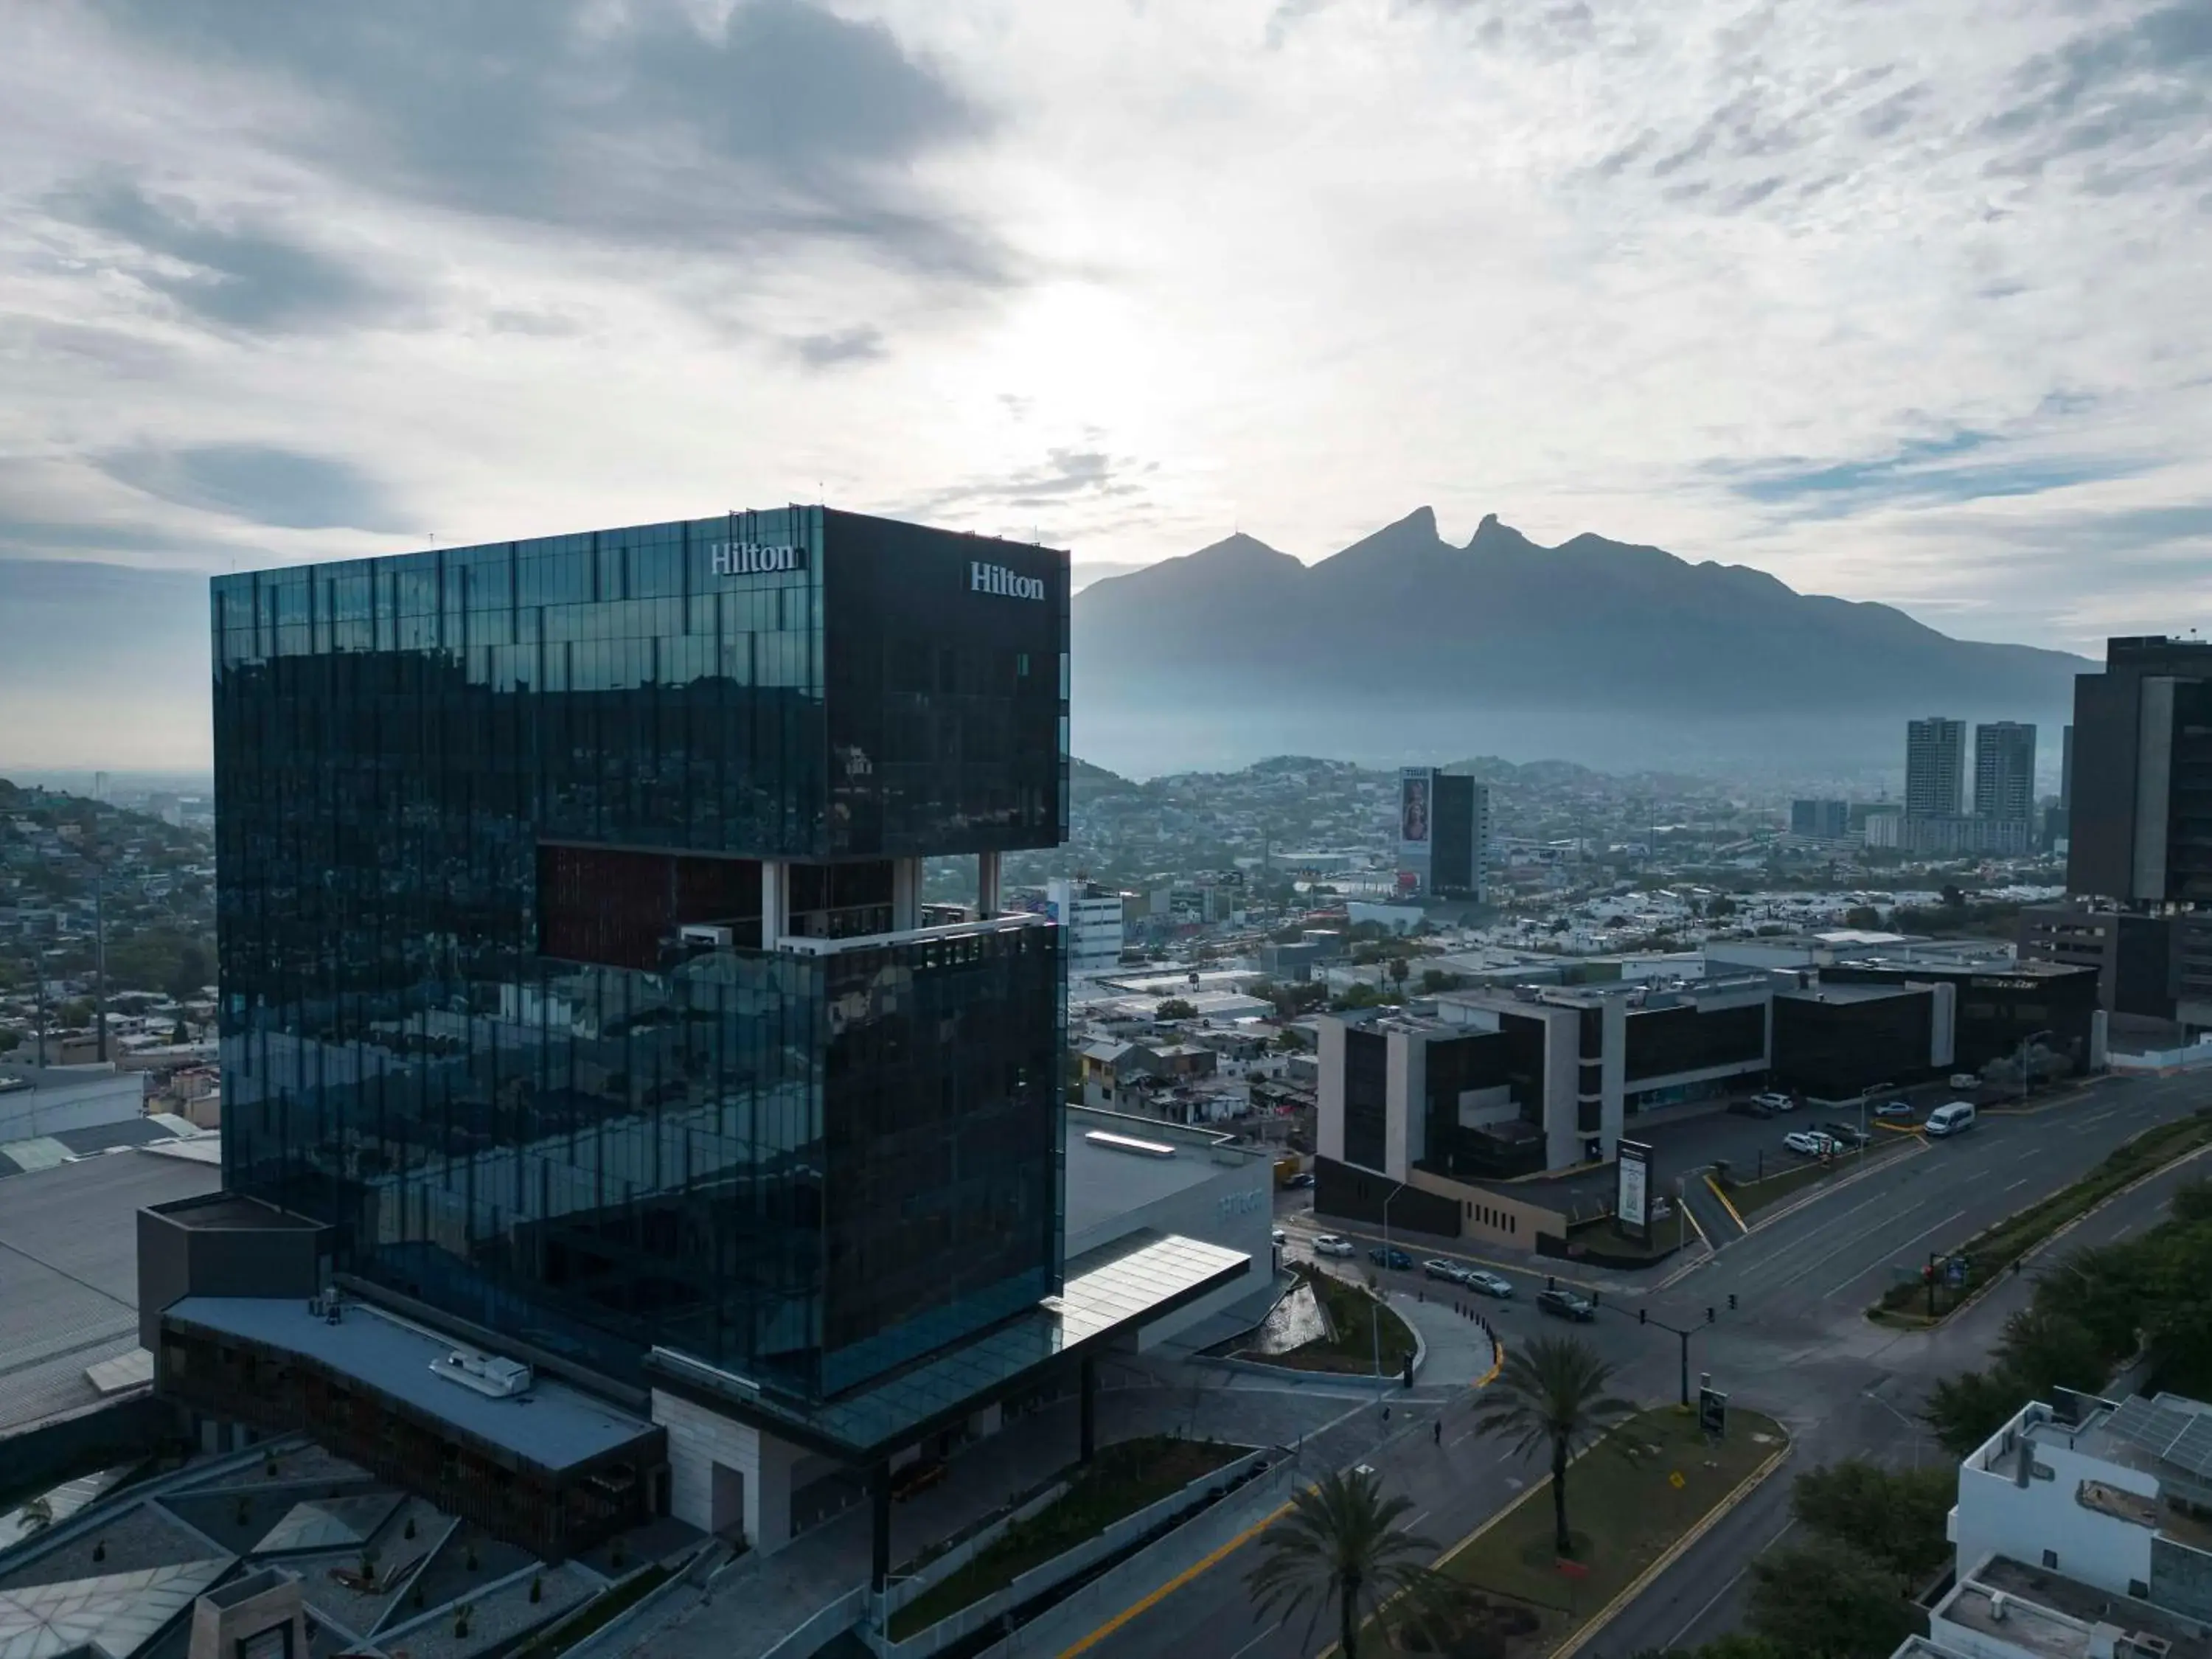 Property building in Hilton Monterrey